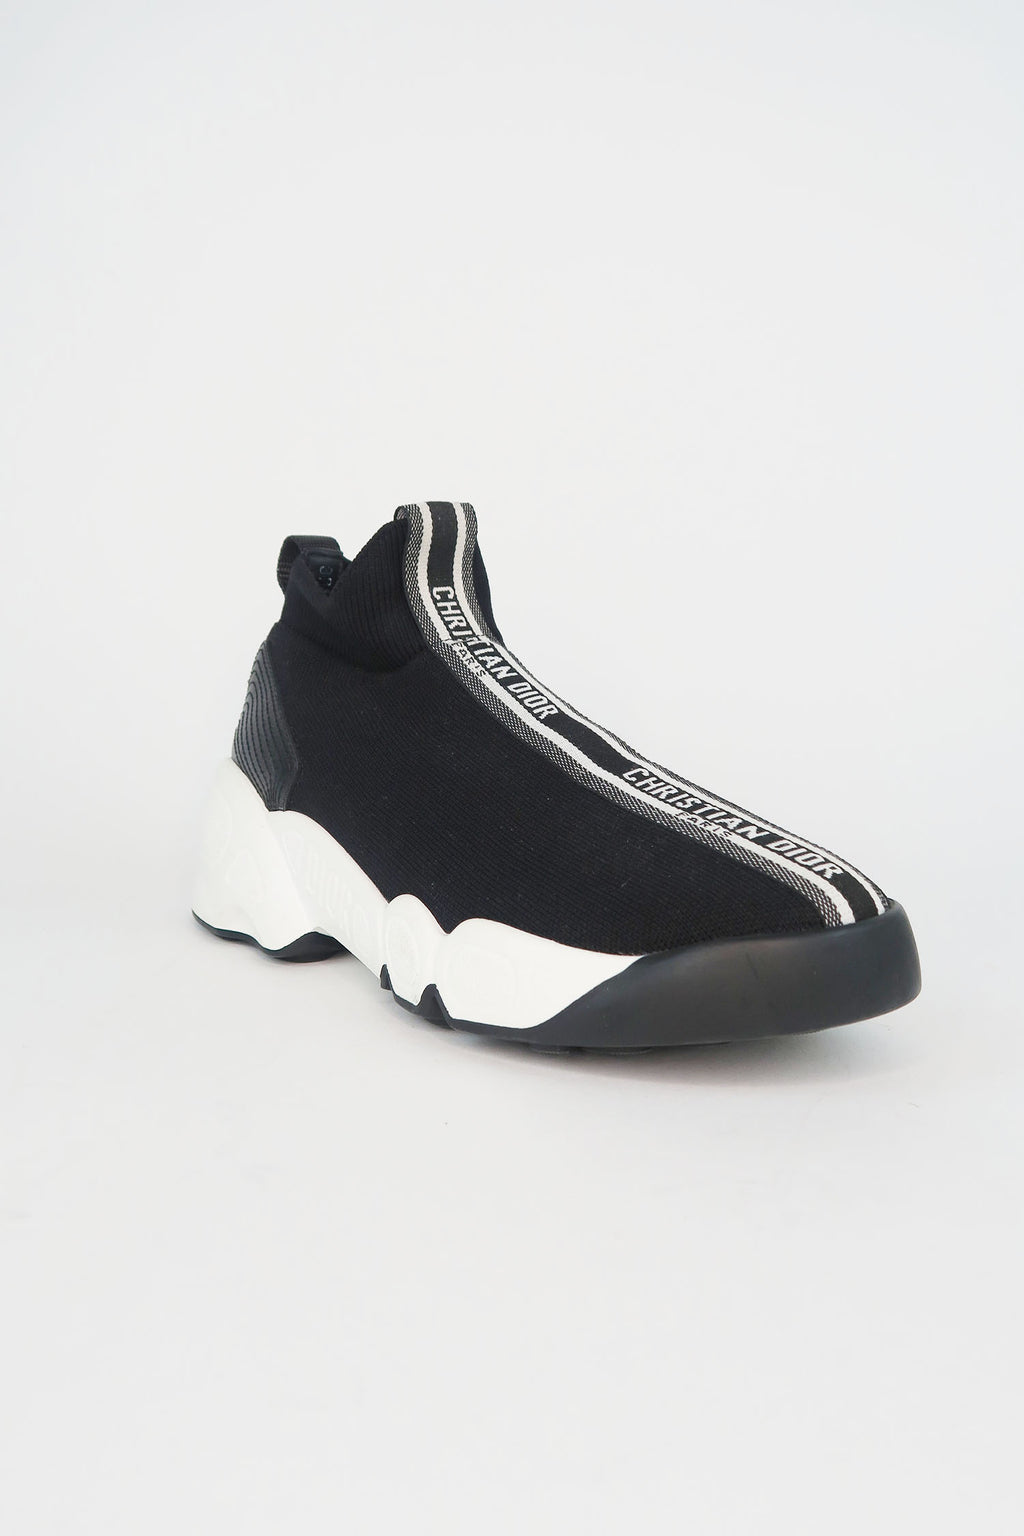 Christian Dior F. Two Point Zero Sock Sneakers sz 37